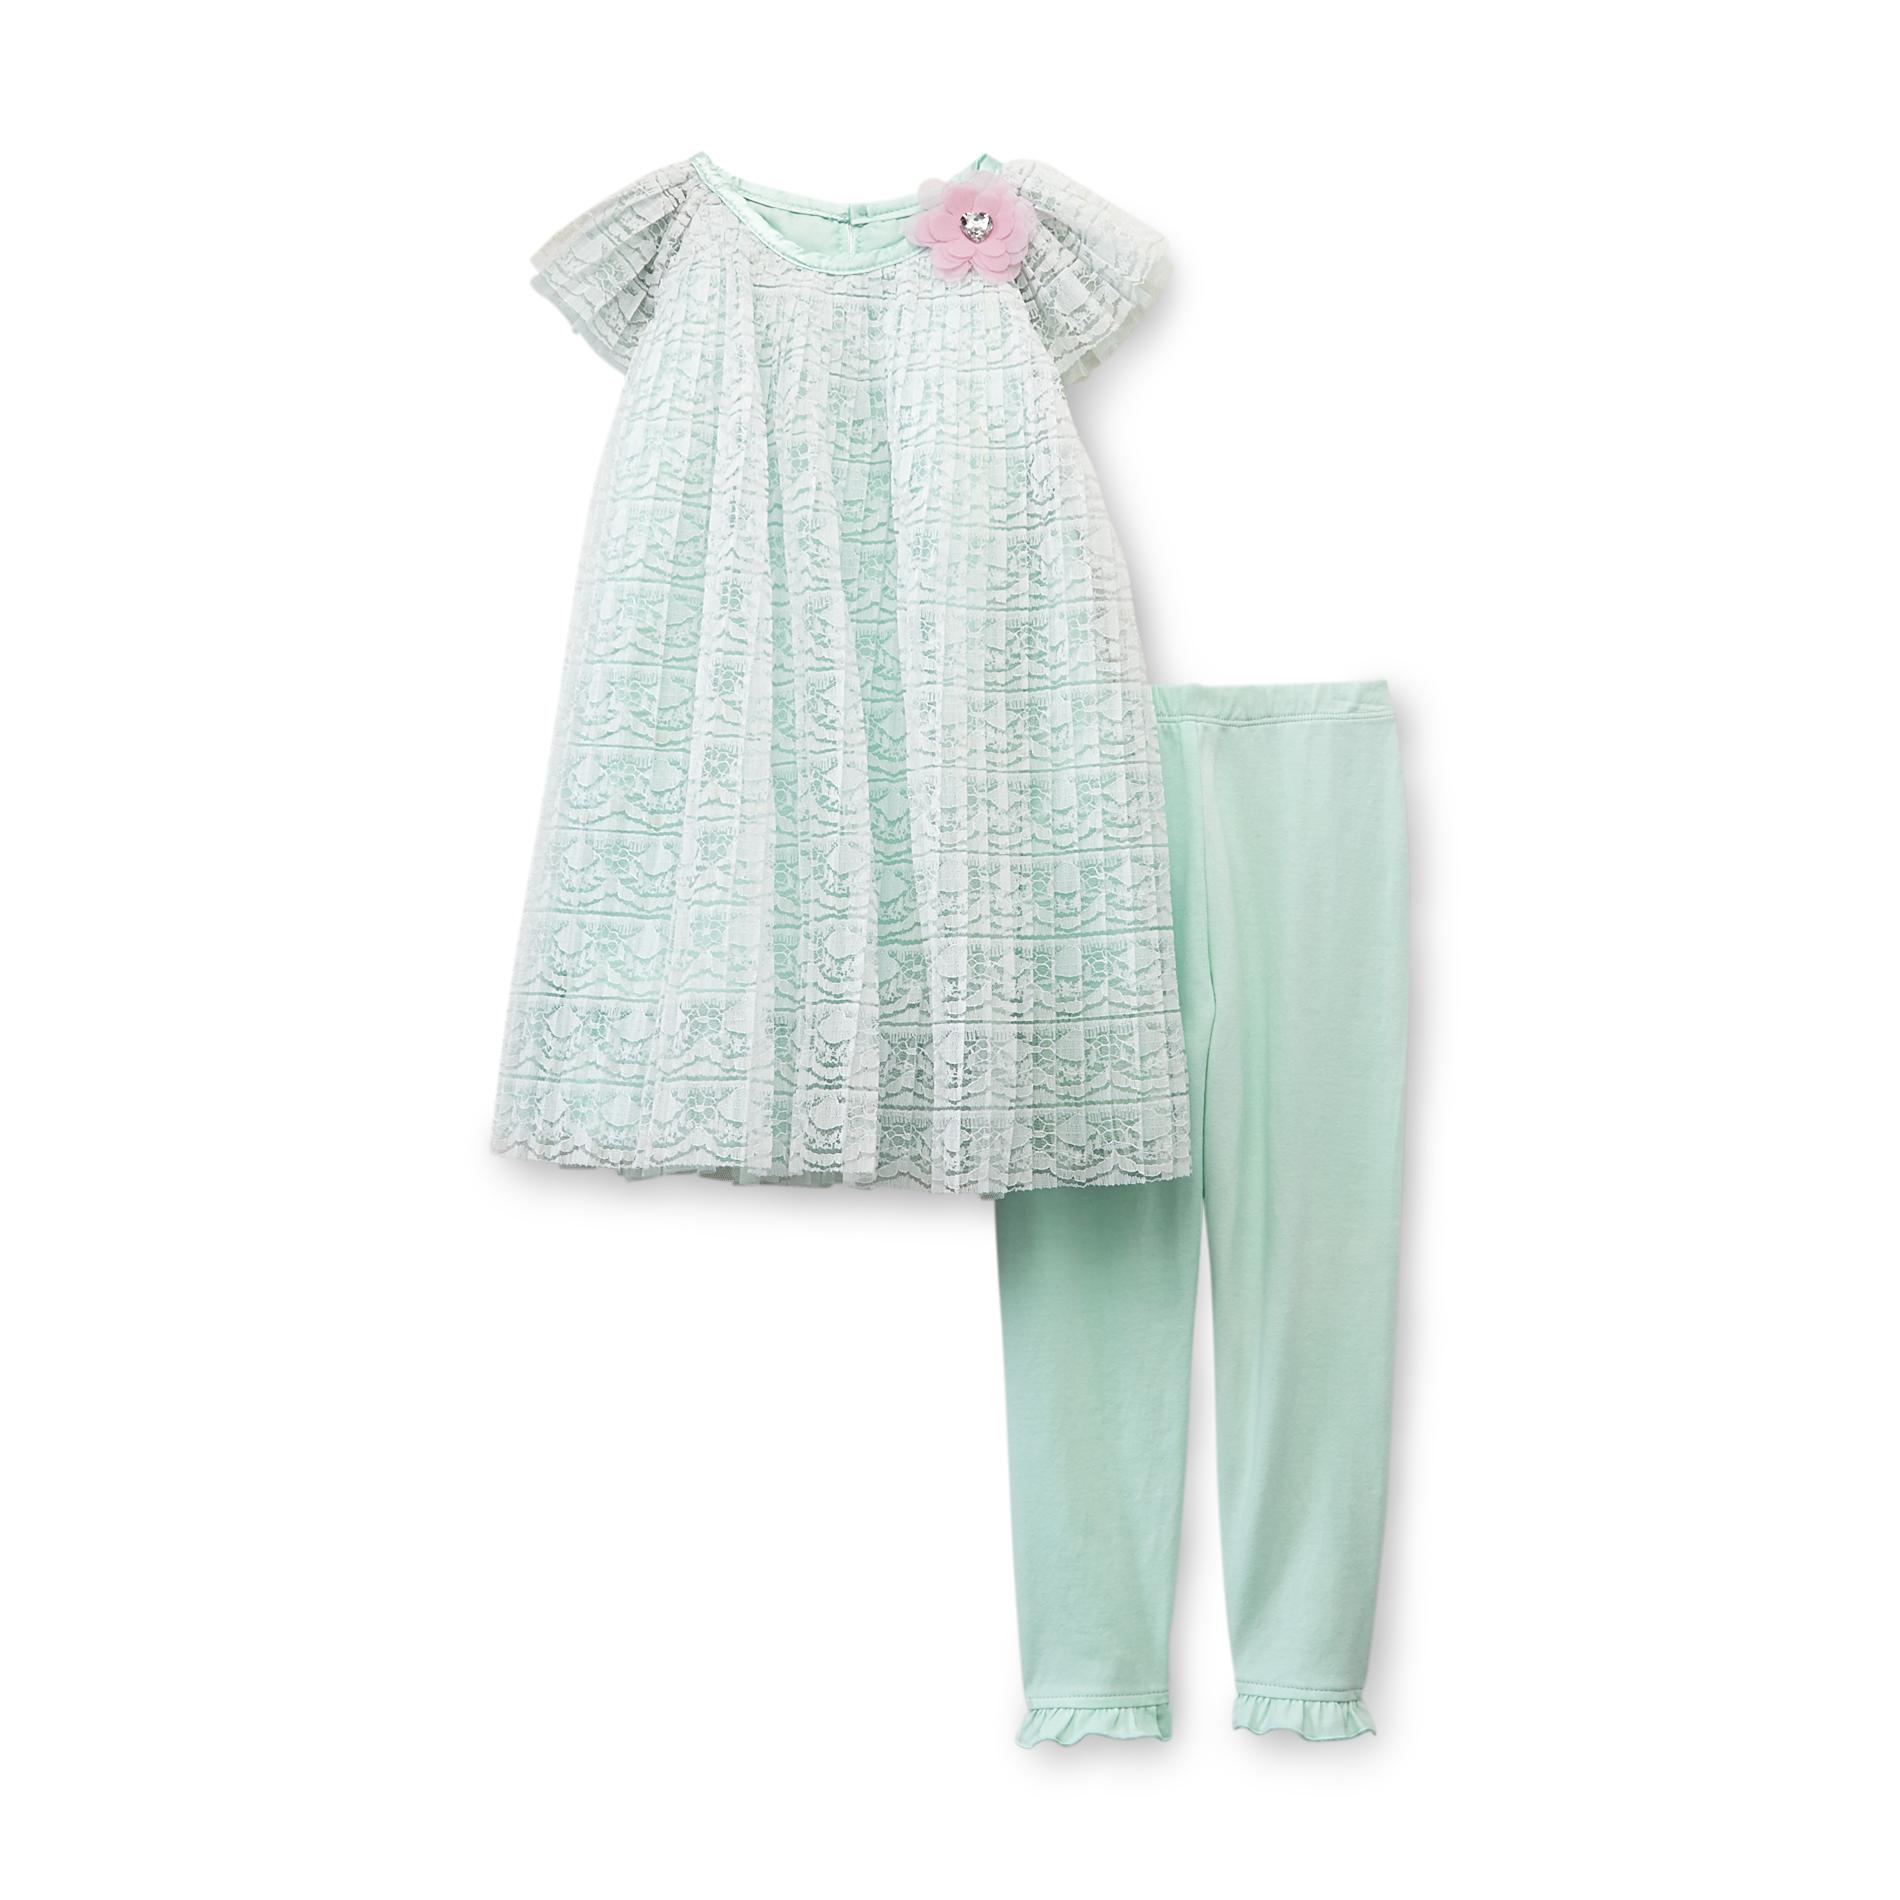 Baby Grand Signature Infant & Toddler Girl's Lace Dress & Leggings